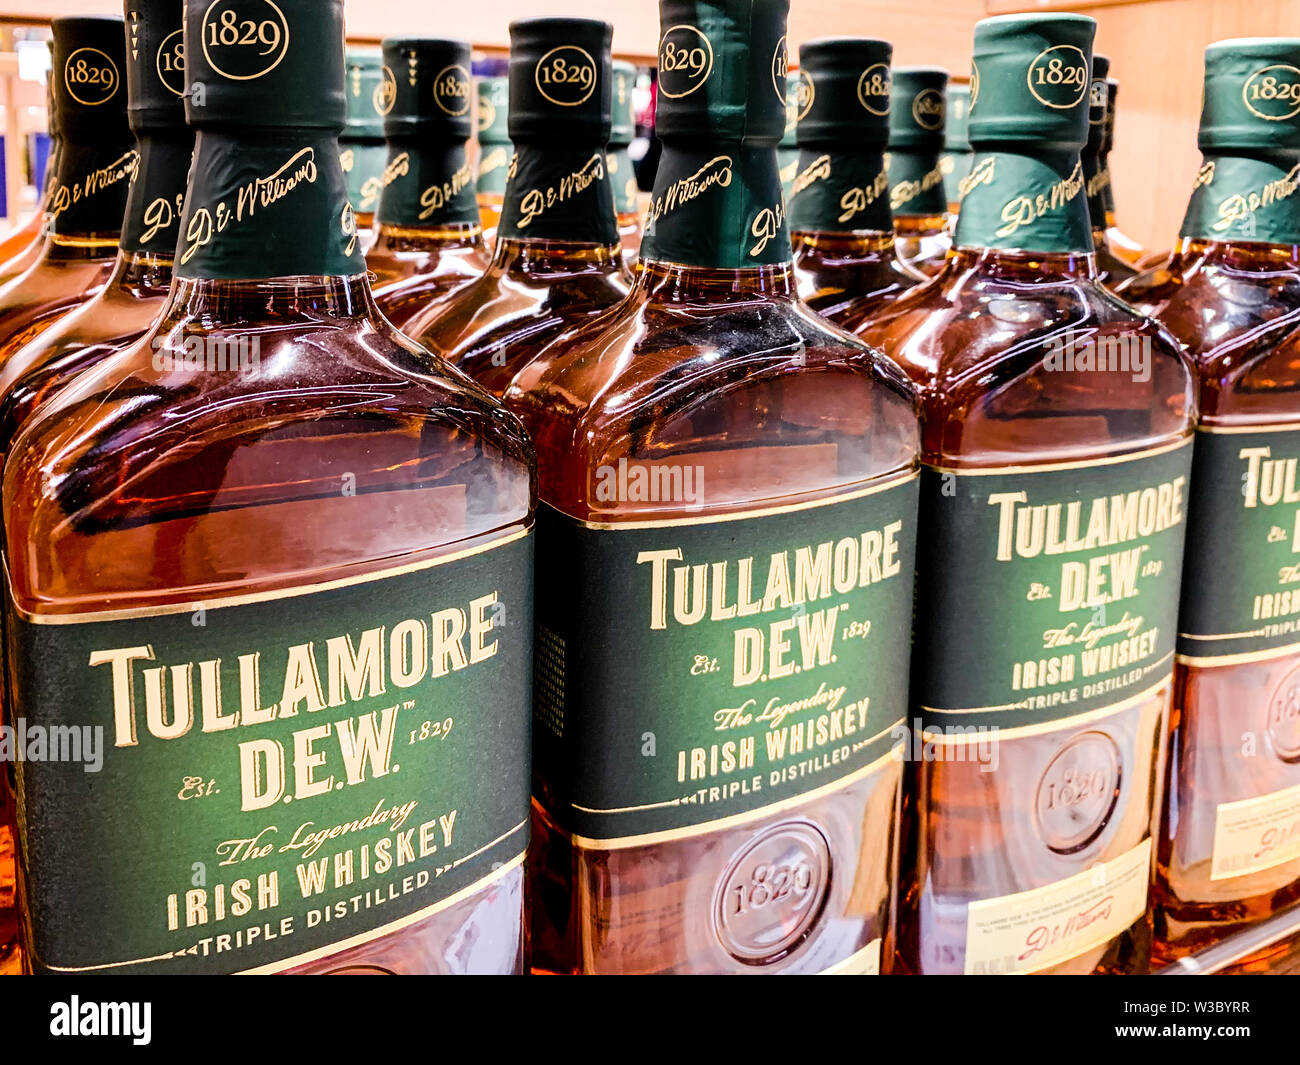 Bottles of Tullamore Dew whisky, an Irish liquor brand founded in 1829, selling internationally. Istanbul/ Turkey - April 2019 Stock Photo